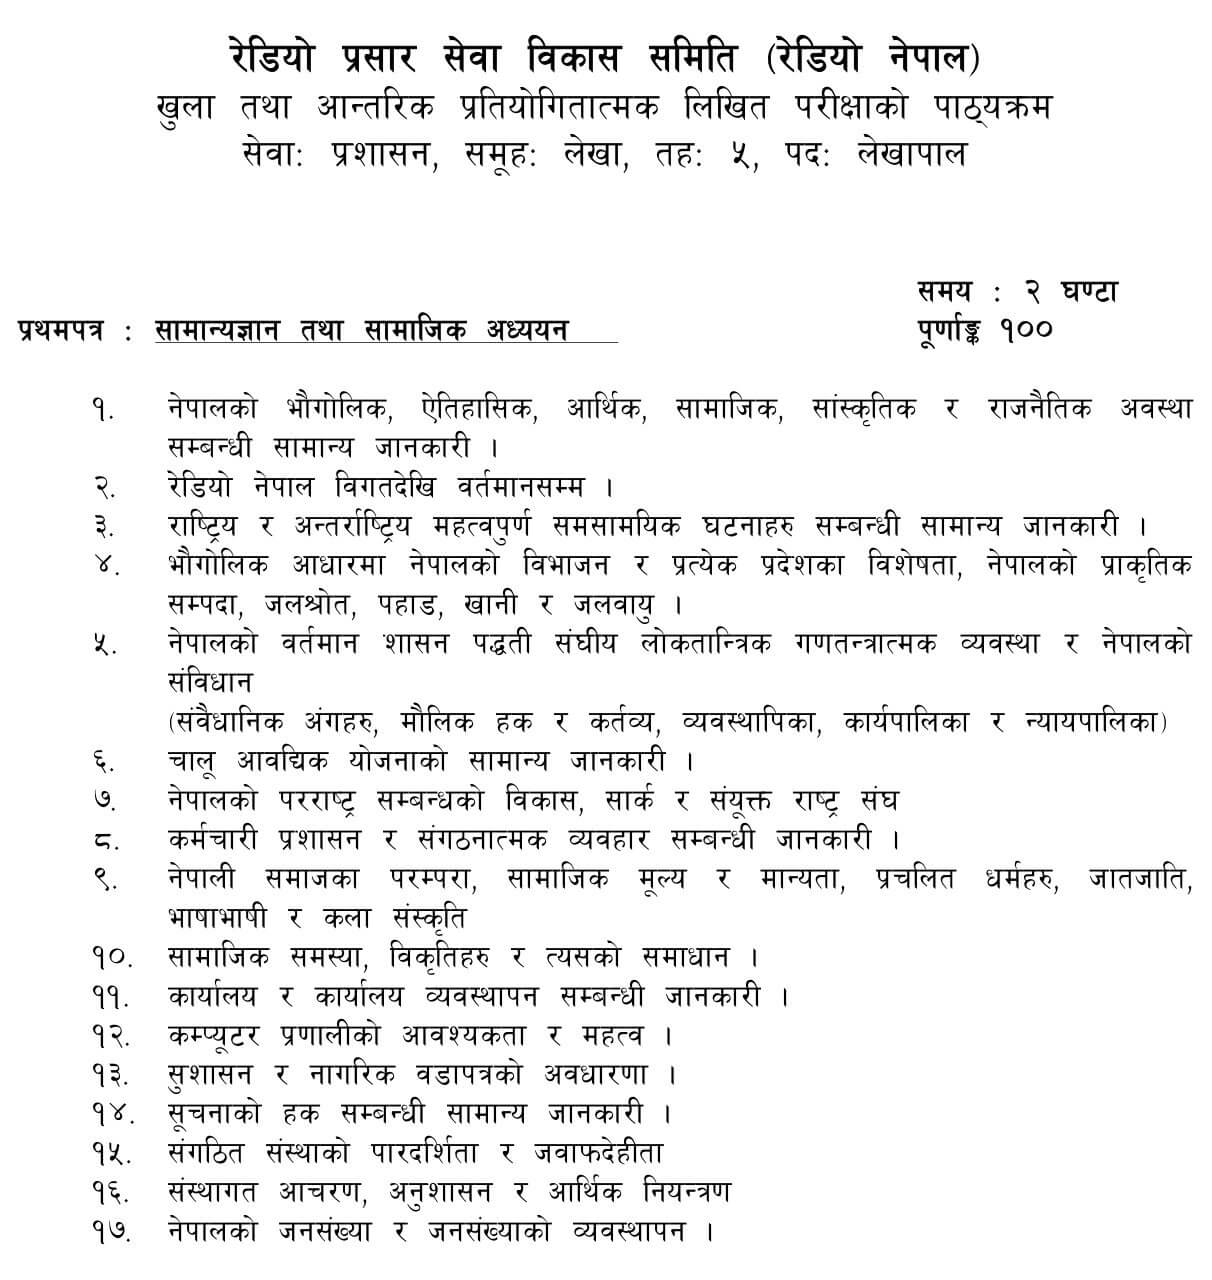 Radio Nepal Syllabus Department: Financial Administration Rank: Level 5 Accountant. Radio Nepal Level 5 Syllabus - Accountant